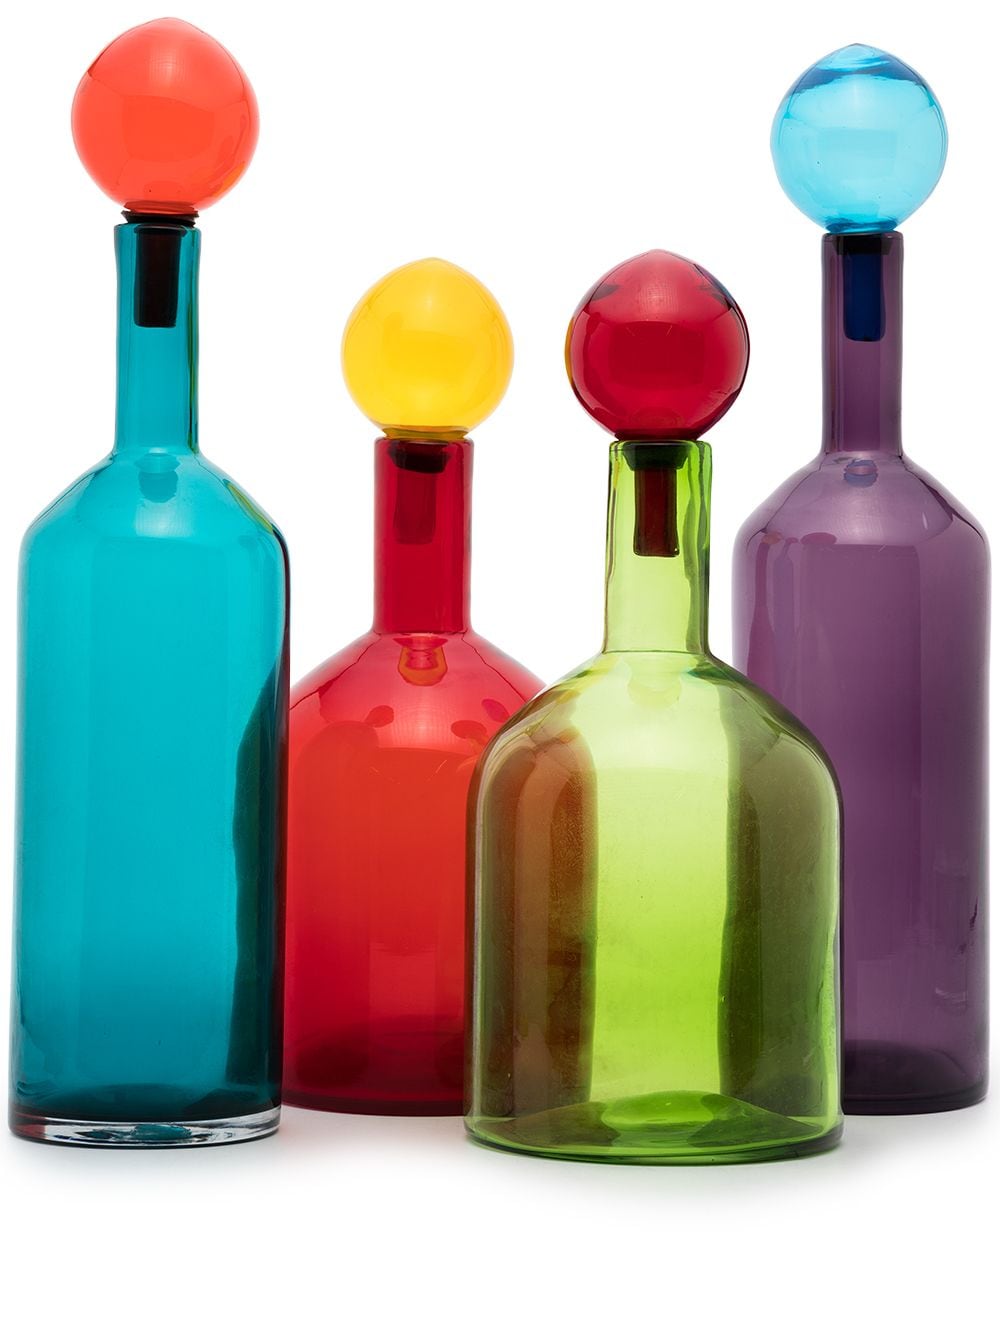 POLSPOTTEN Bubbles and Bottles decorative bottles (set of 4) - Blue von POLSPOTTEN